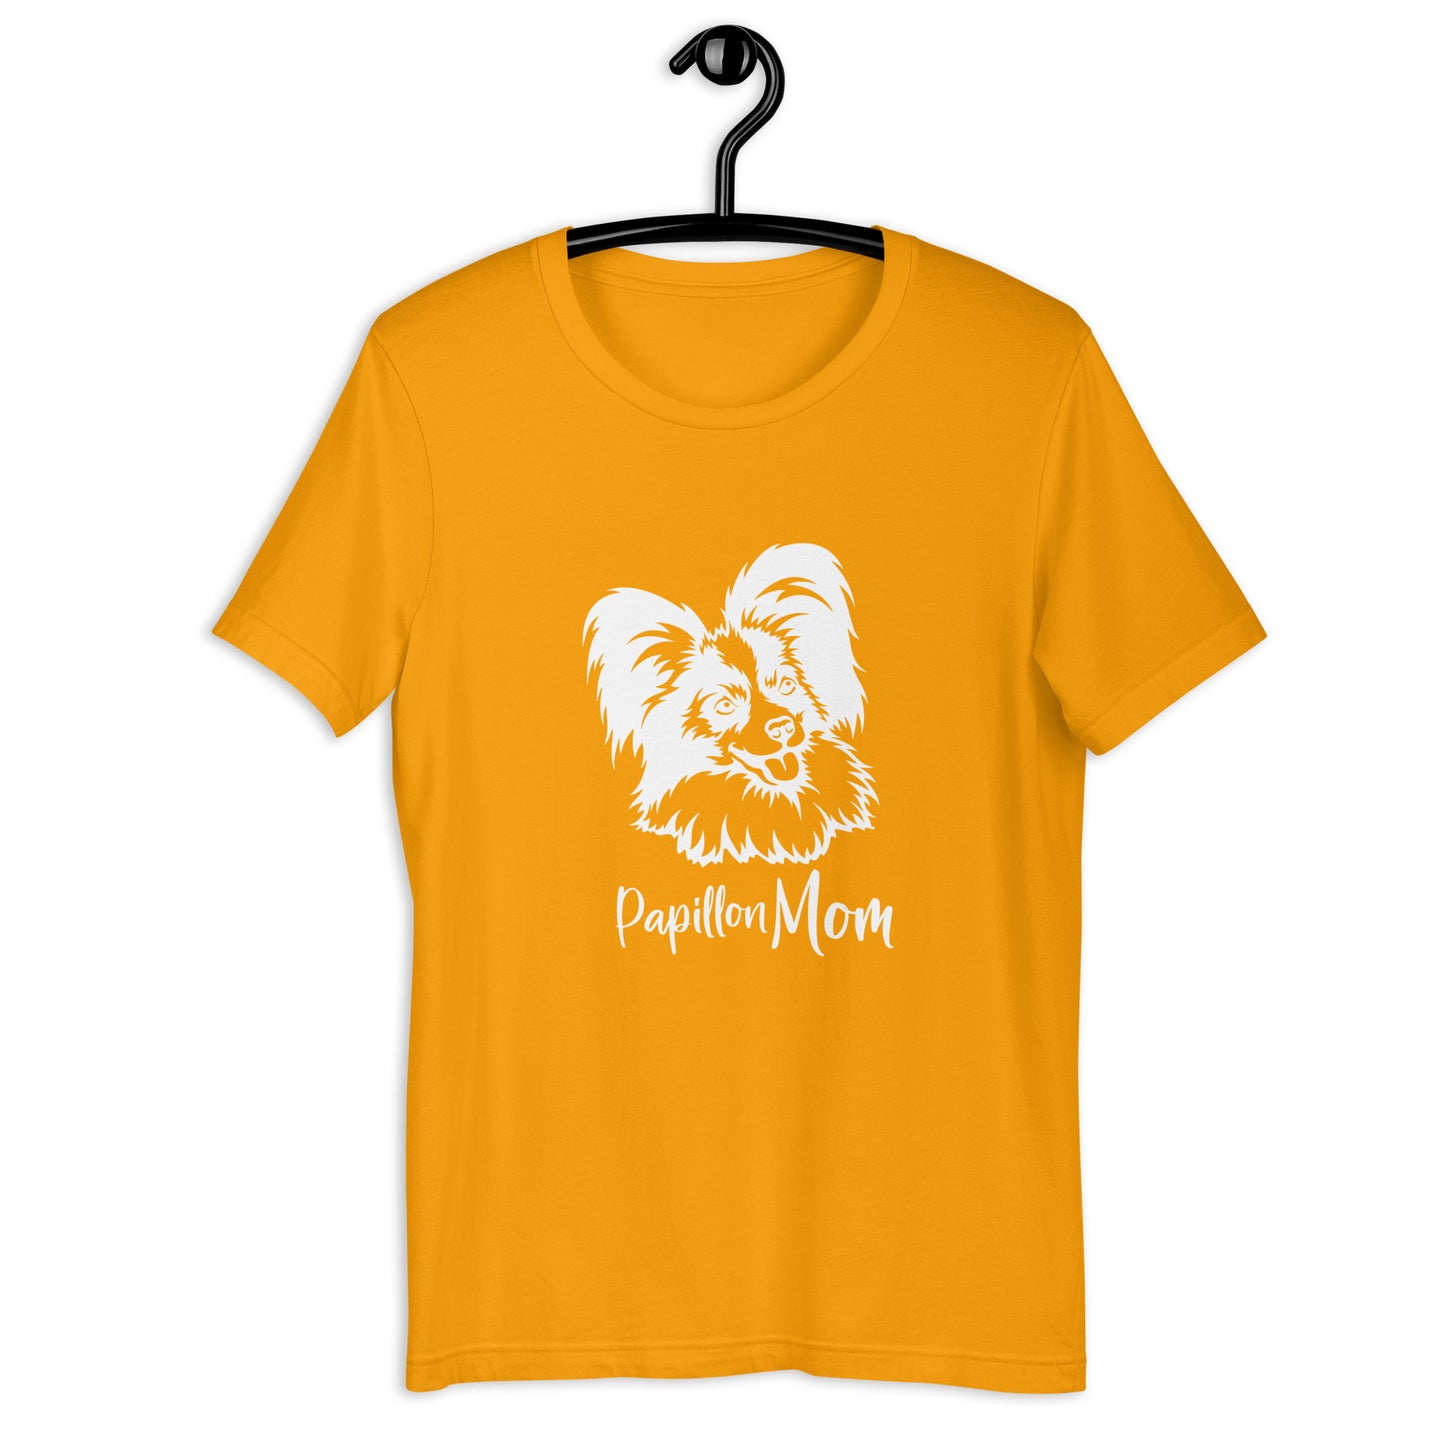 PAPILLON MOM - Unisex t-shirt